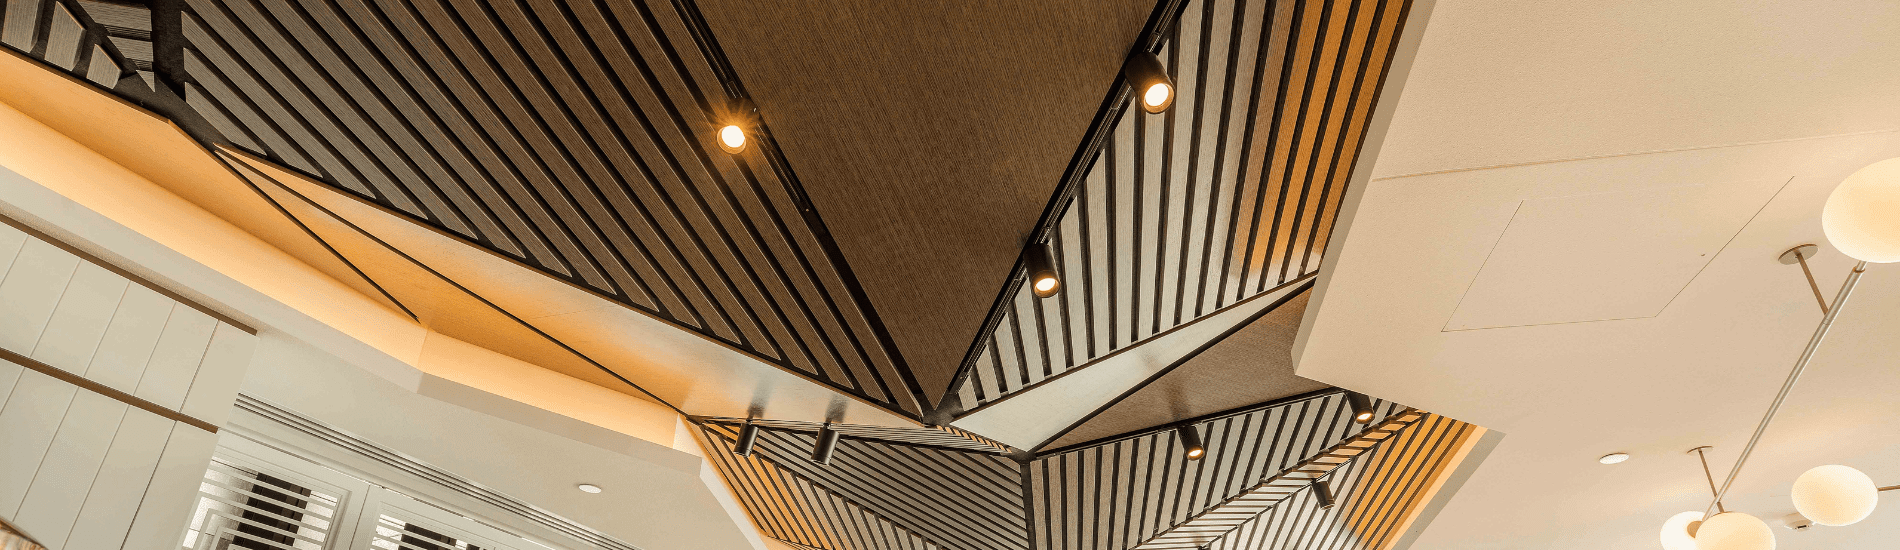 Complex and irregular custom SUPASLAT creates mountain range effect on hotel ceilings